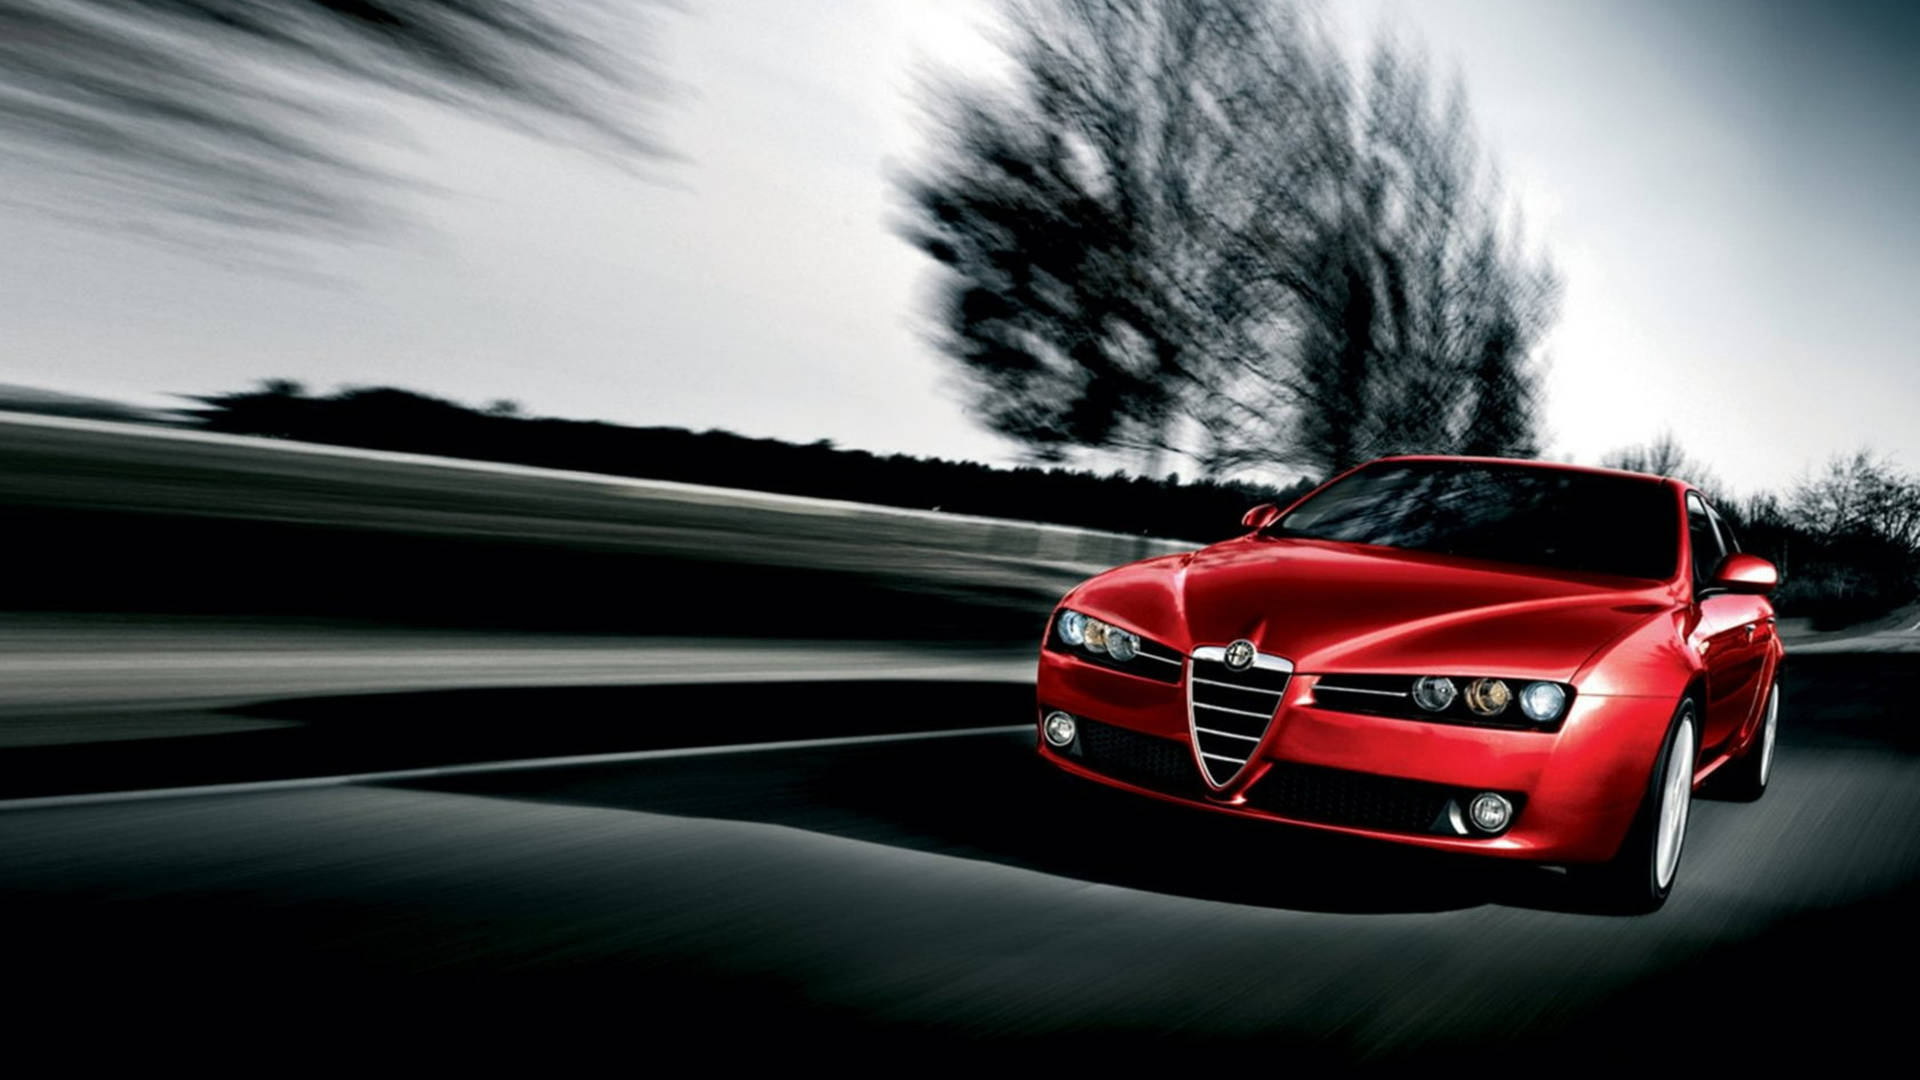 Speeding Red Alfa Romeo 159 Picture